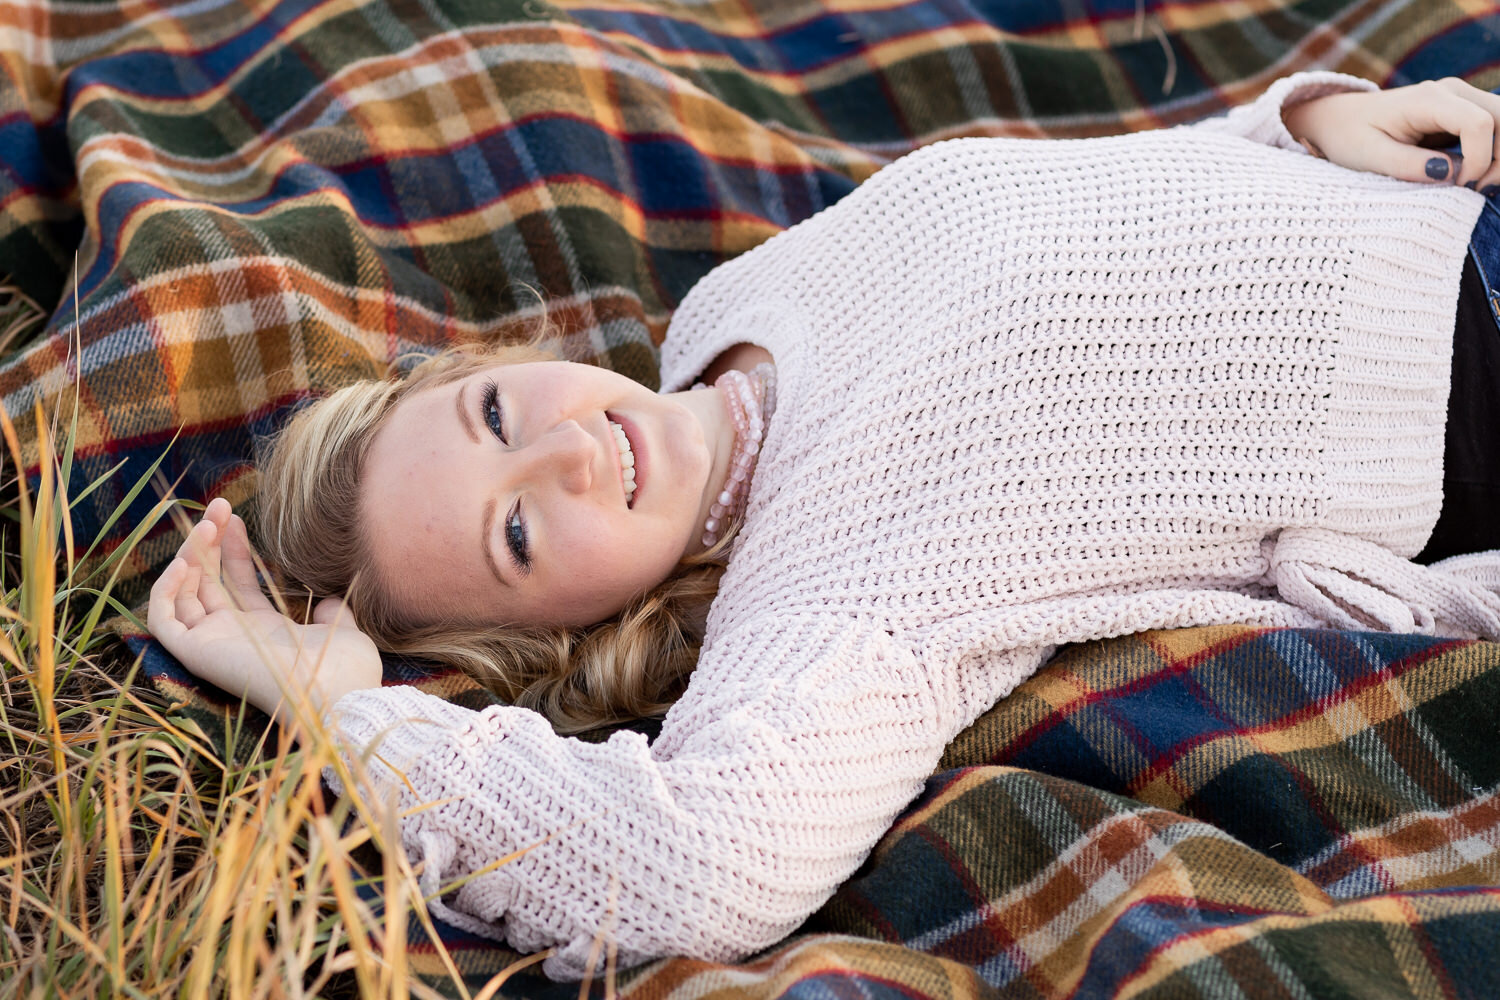 Gwen laying on a wool blanket